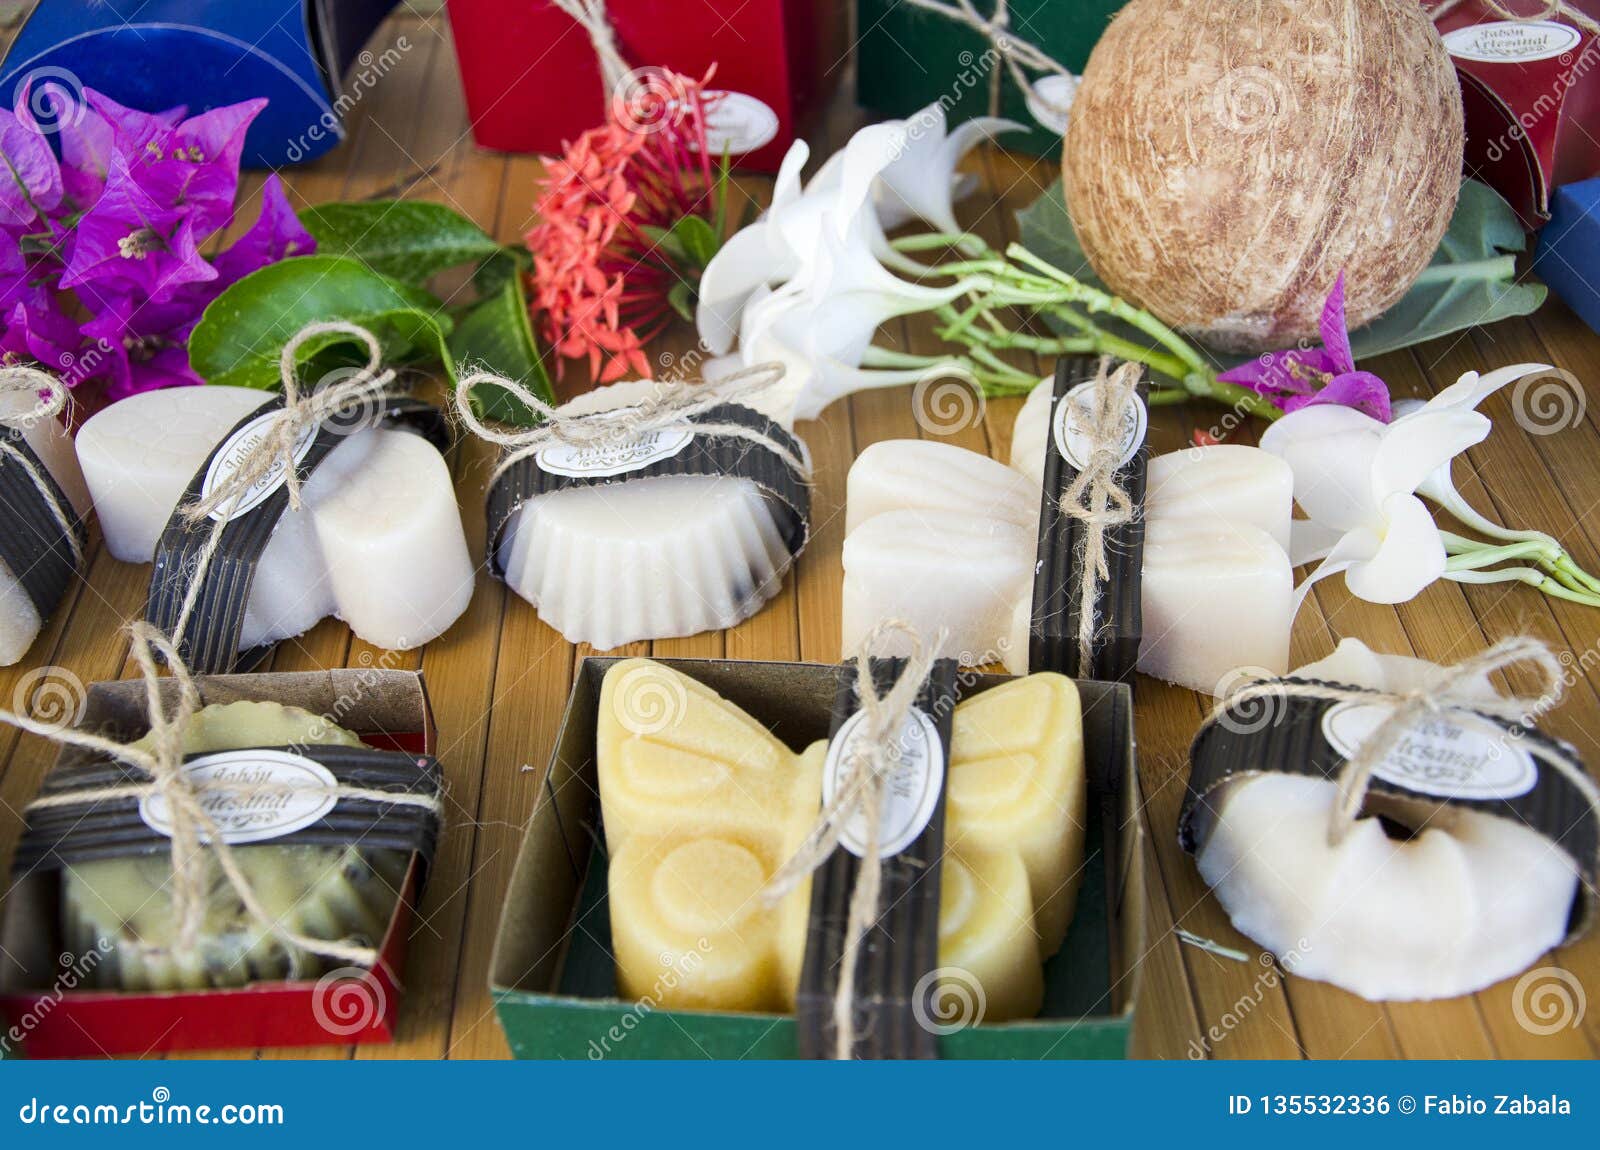 handcrafted soap coconut naturals